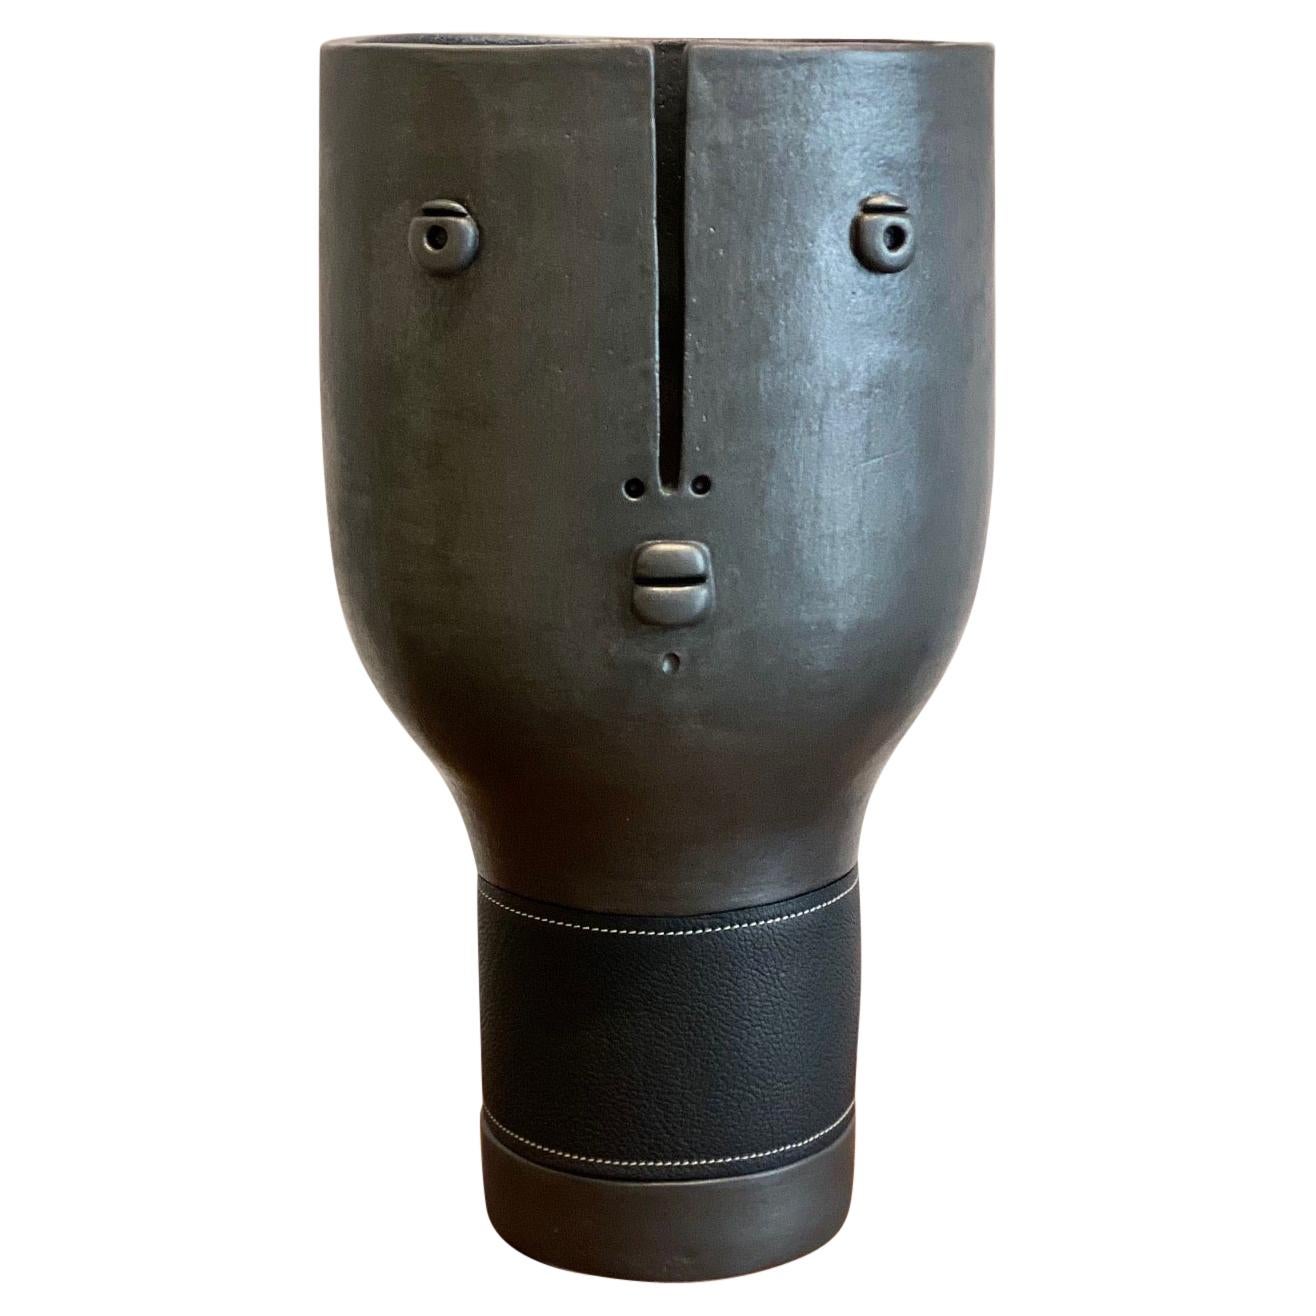 Large Black Ceramic Sculpture Vase "Belted Idole" Signed by Dalo